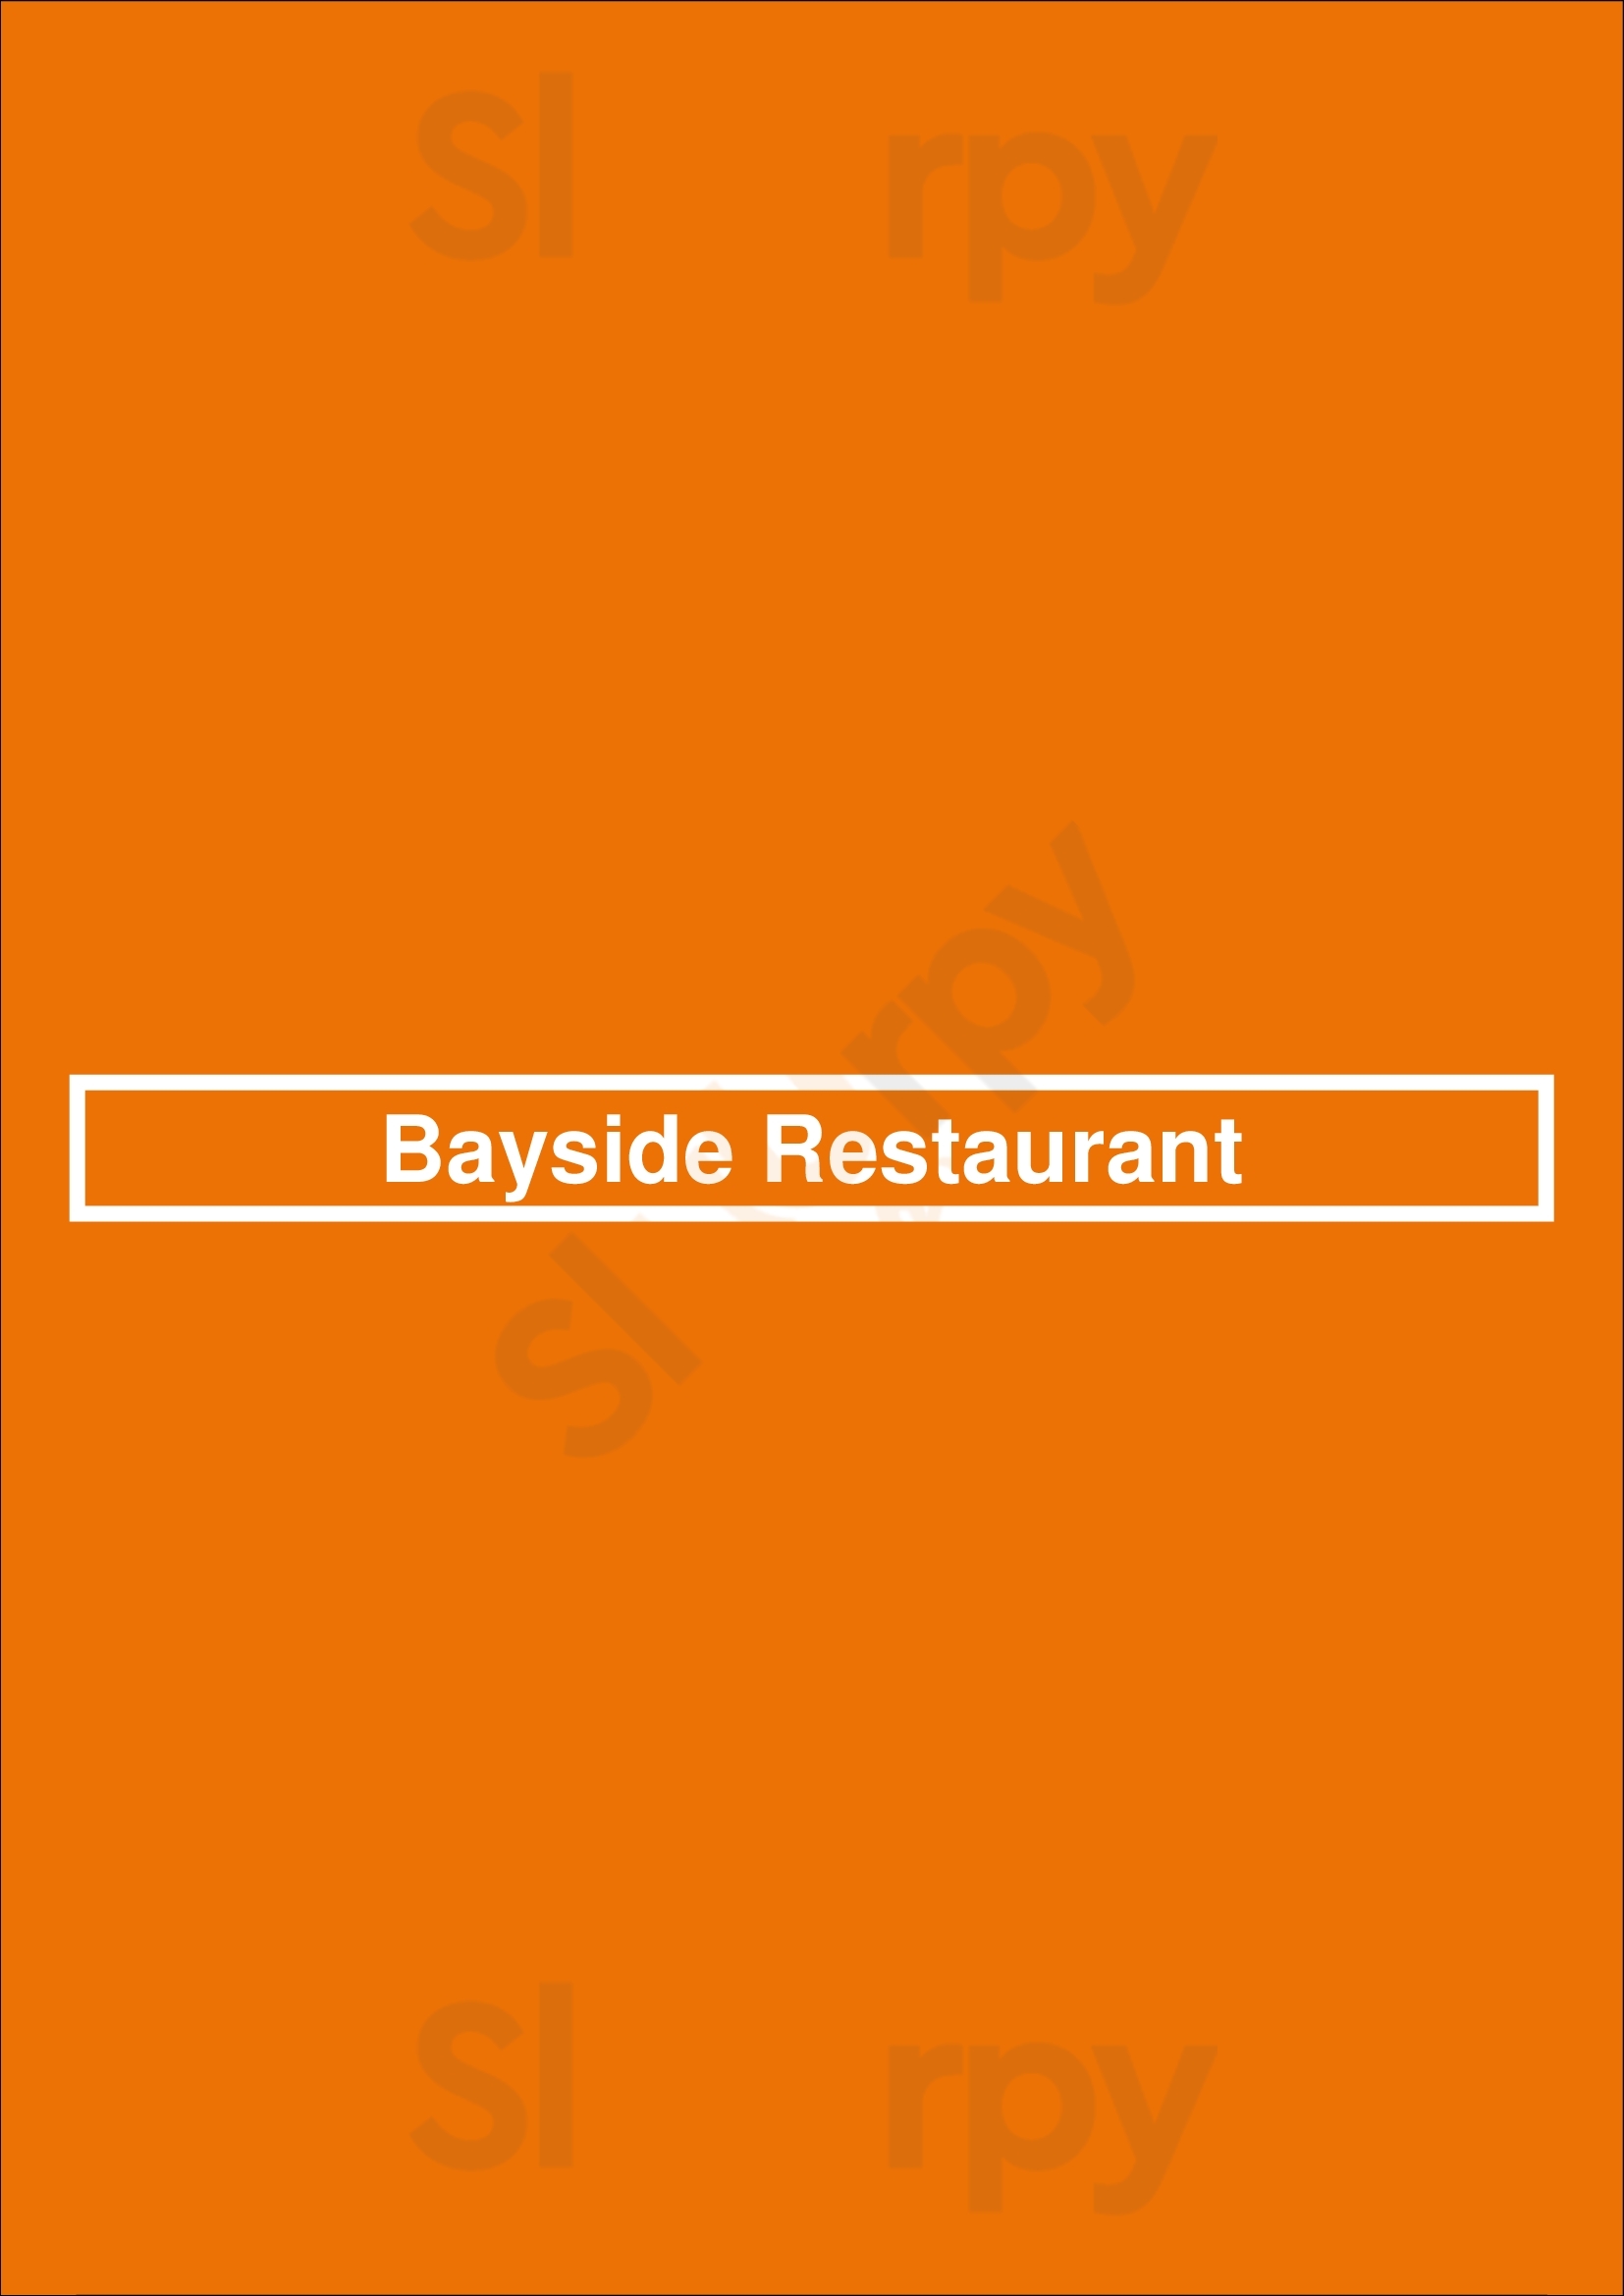 Bayside Restaurant Newport Beach Menu - 1